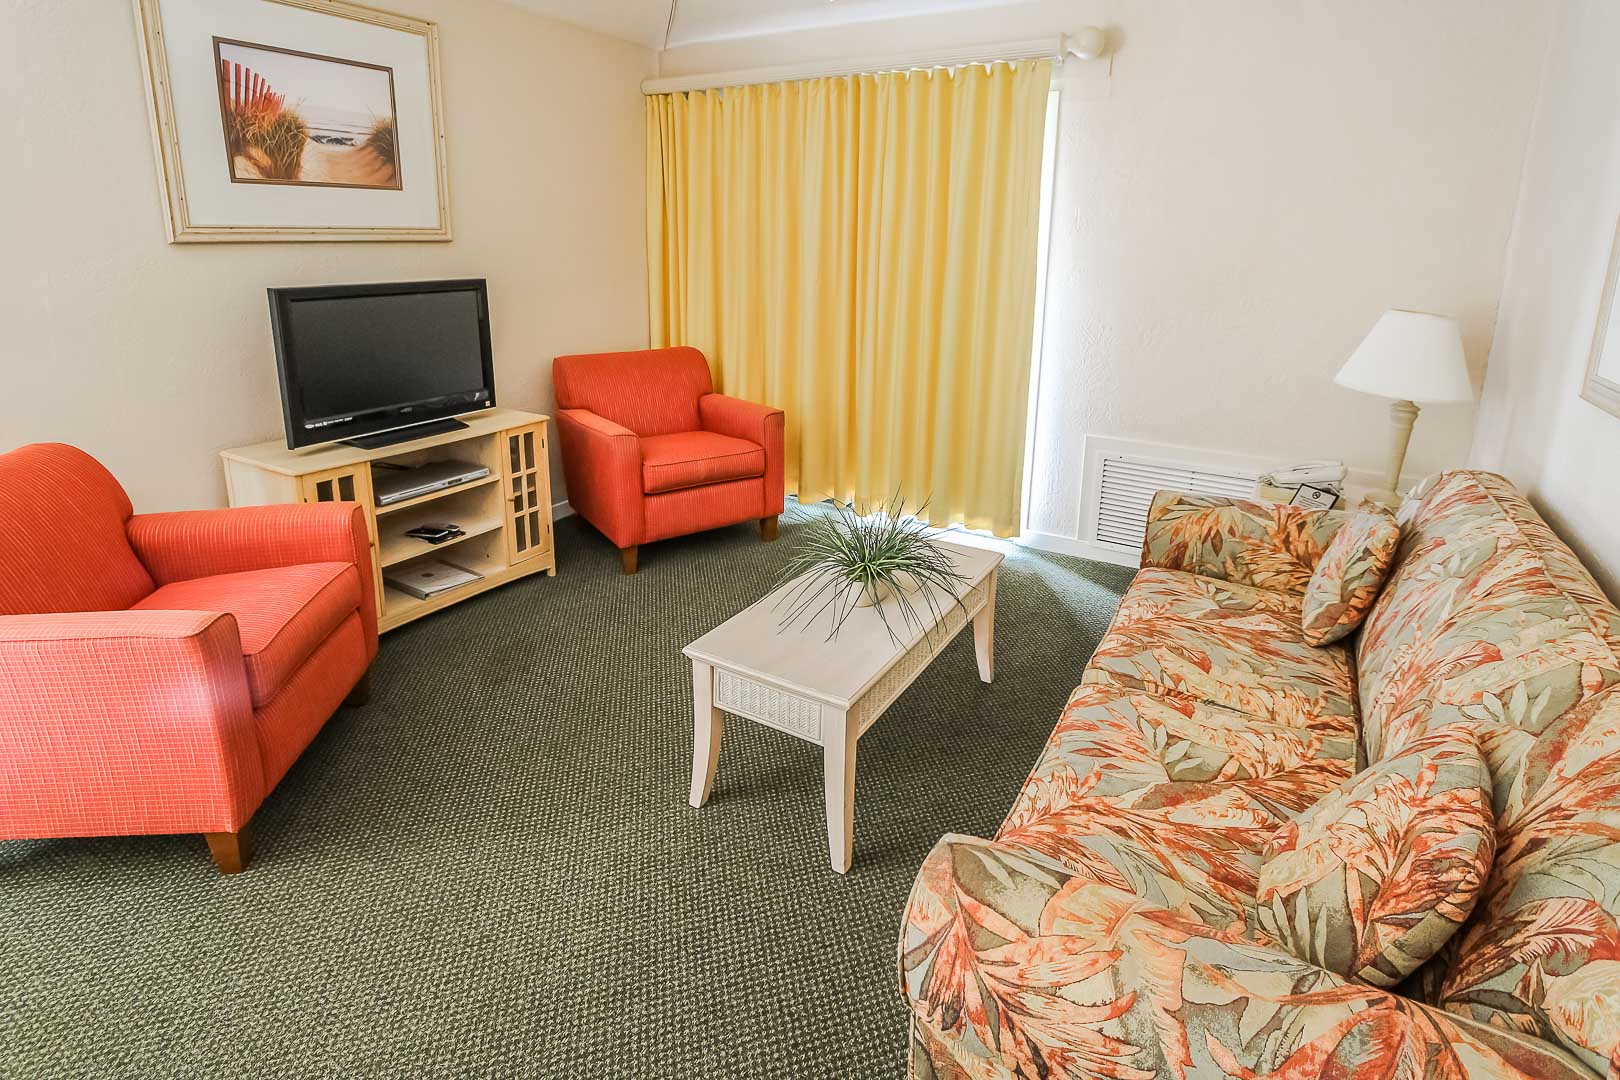 A cozy living room area at VRI's Players Club Resort in Hilton Head Island, South Carolina.